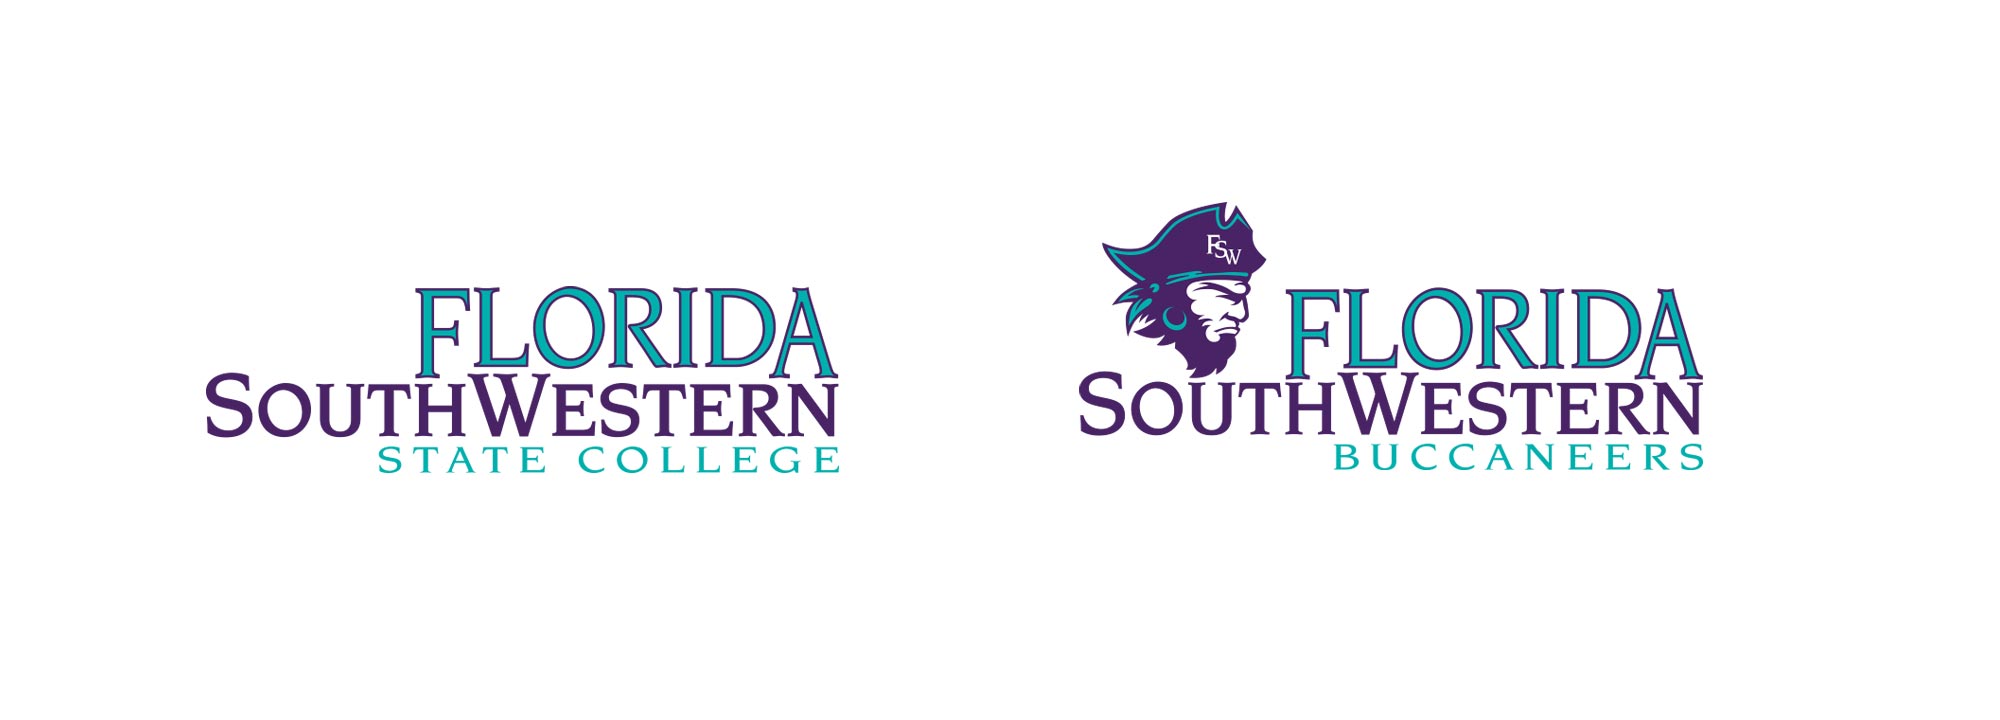 Florida Southwestern State College Logos